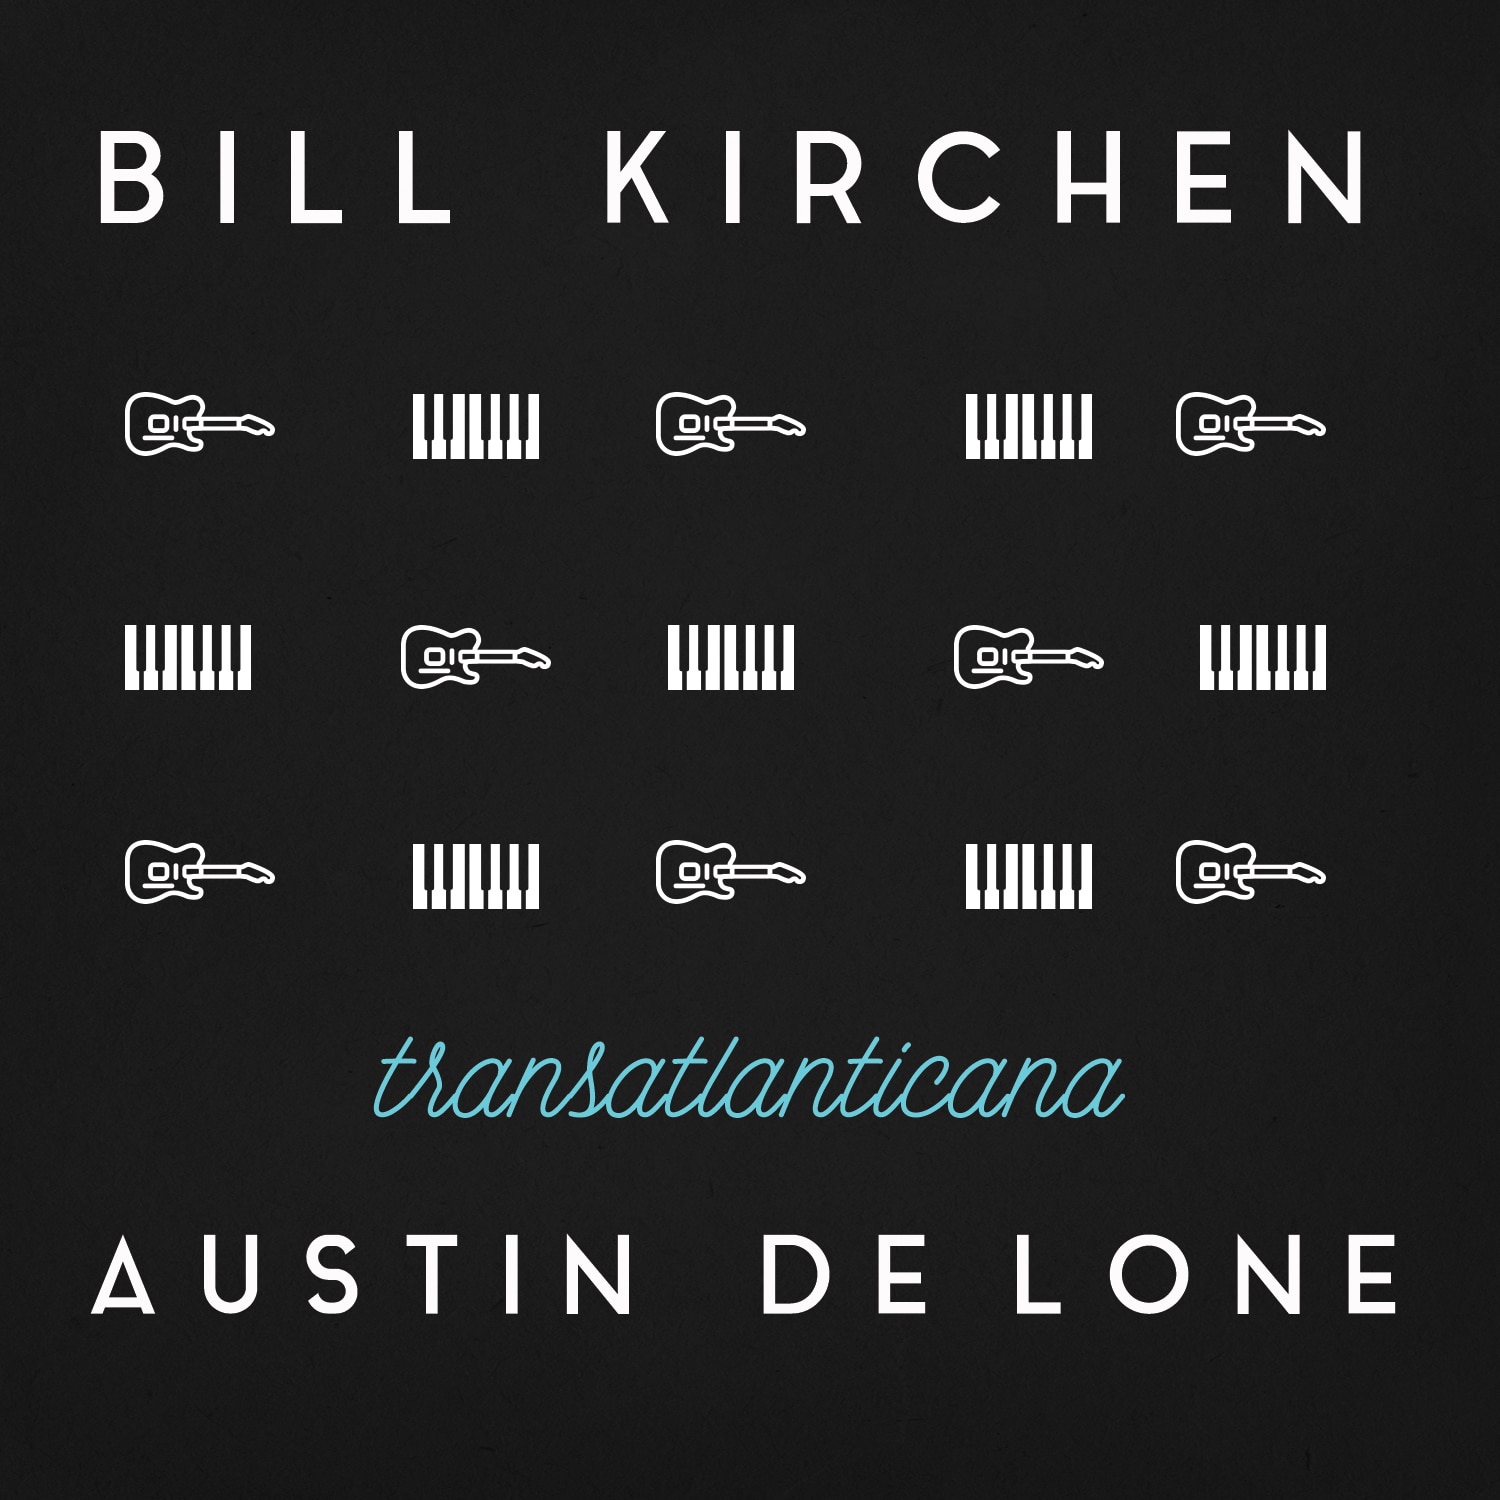 Bill Kirchen & Austin de Lone: Transatlanticana